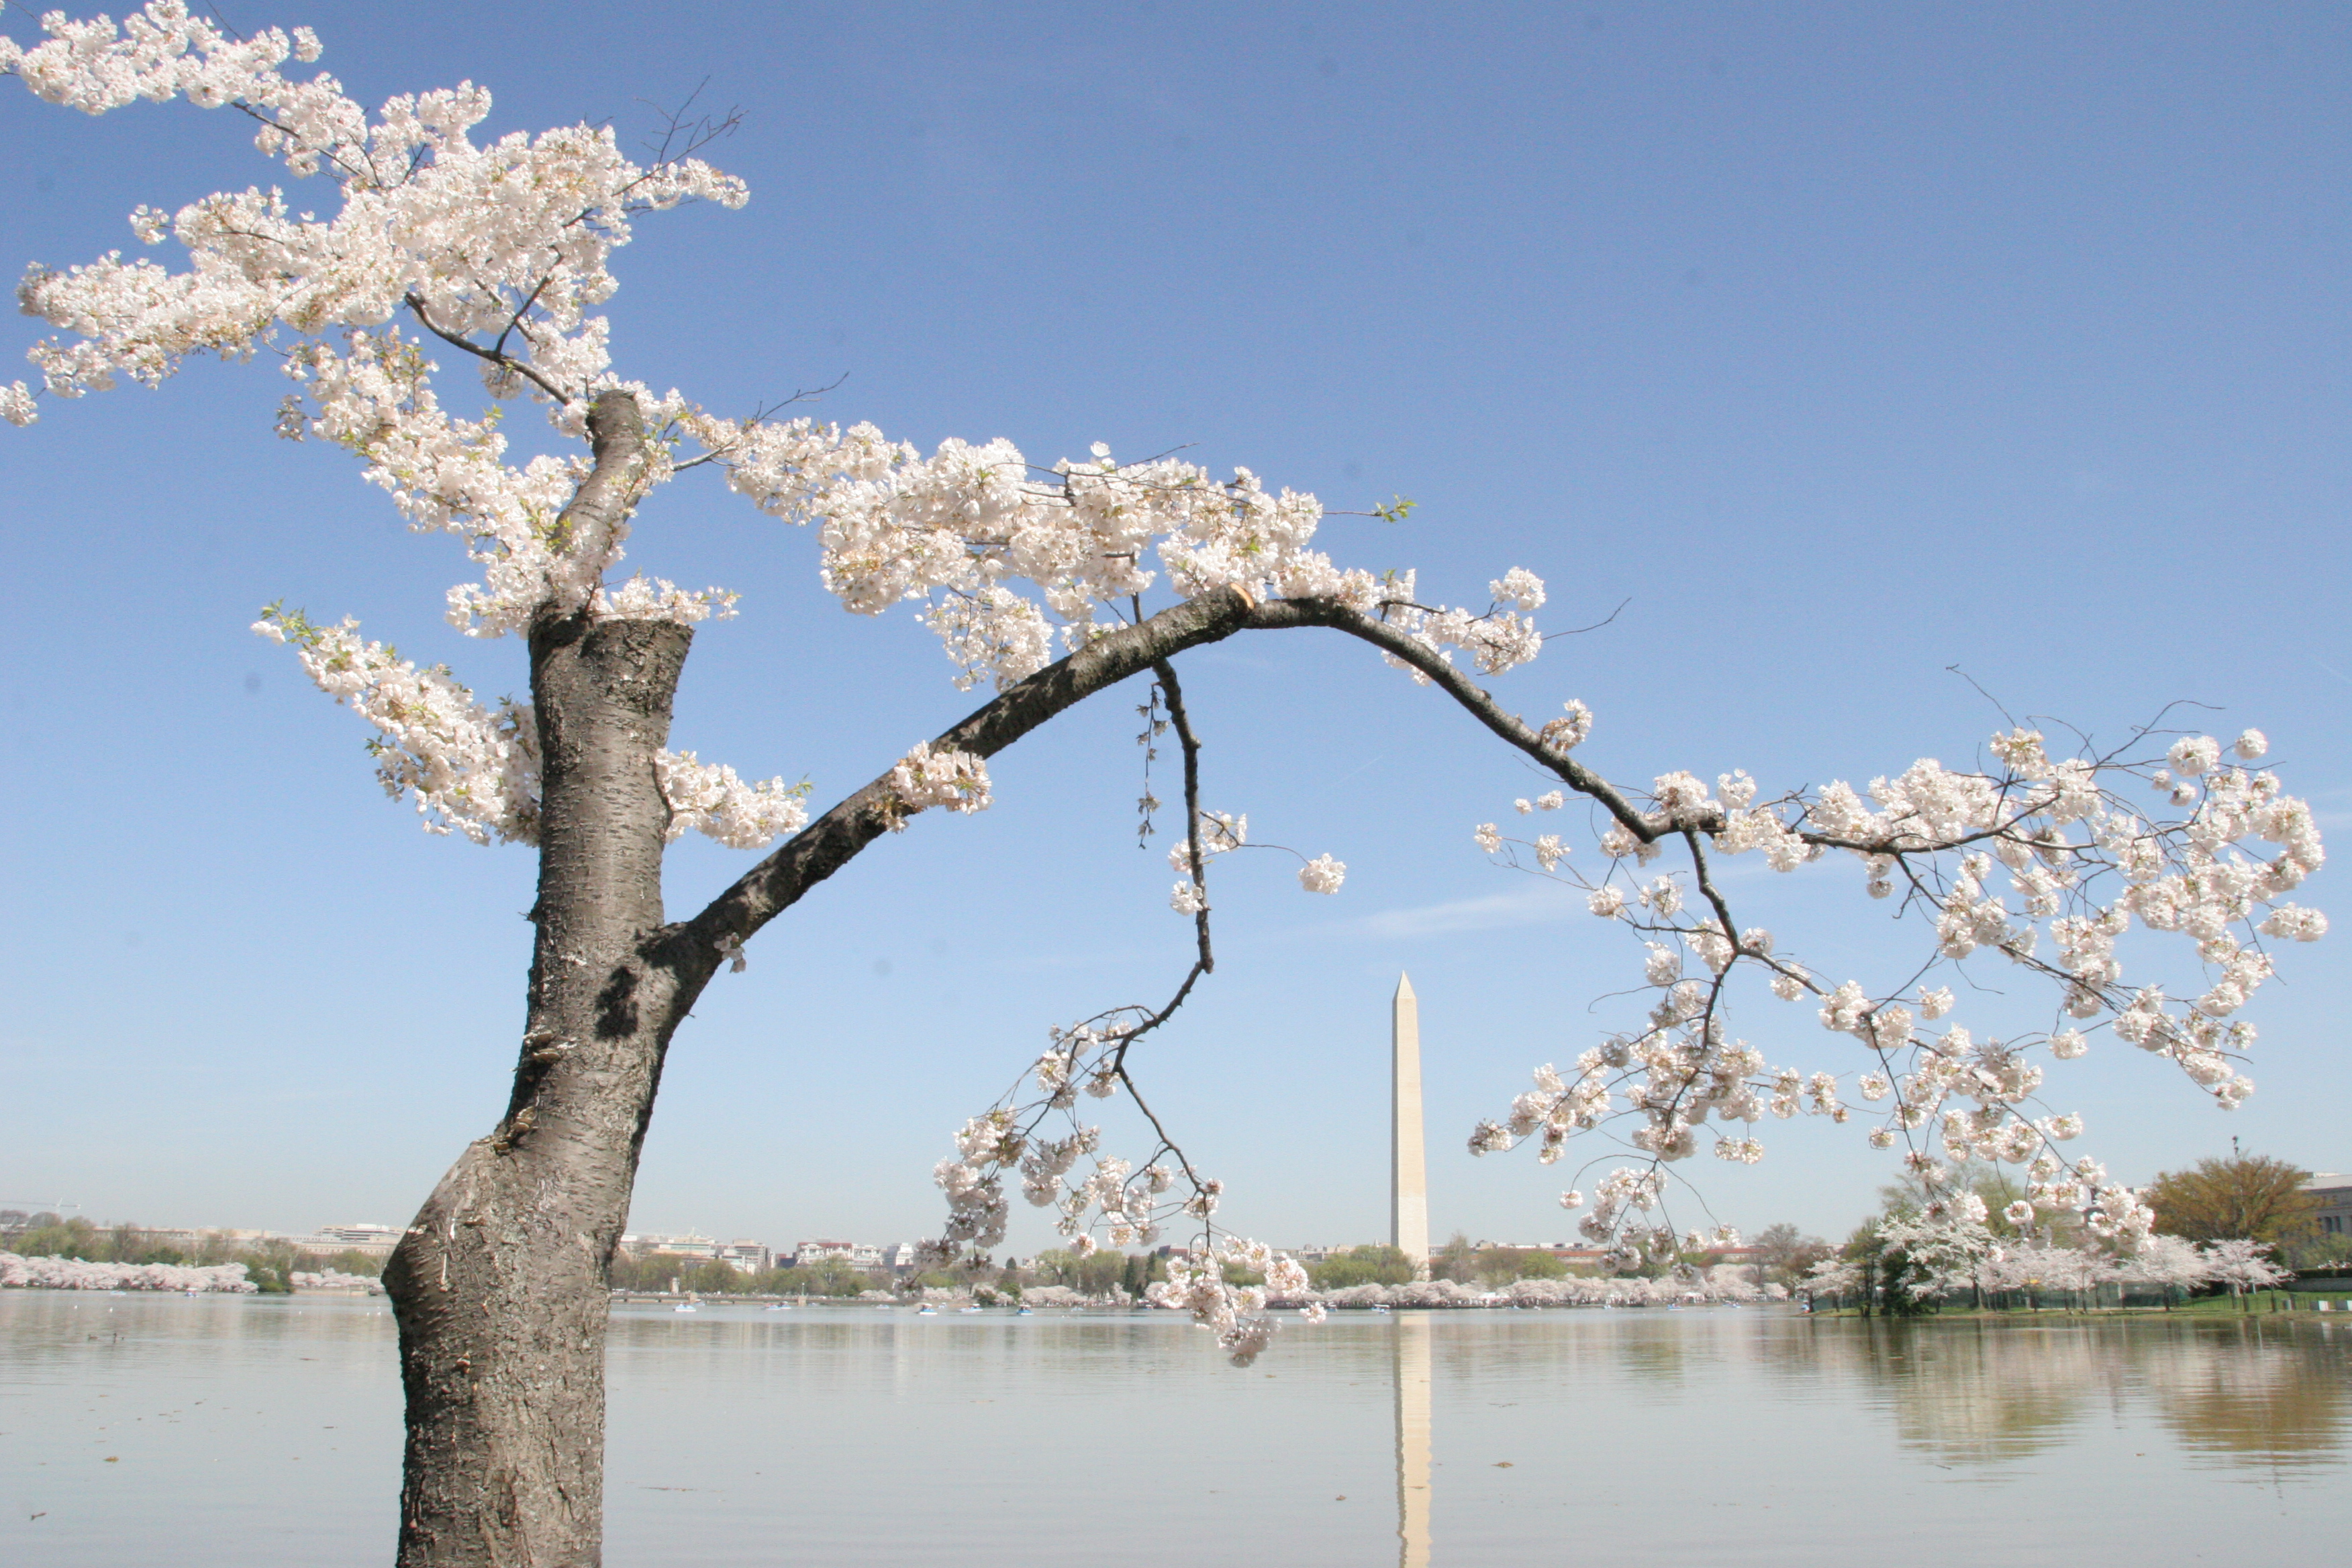 Cherry blossoms - Flickr - Al Jazeera English (10)